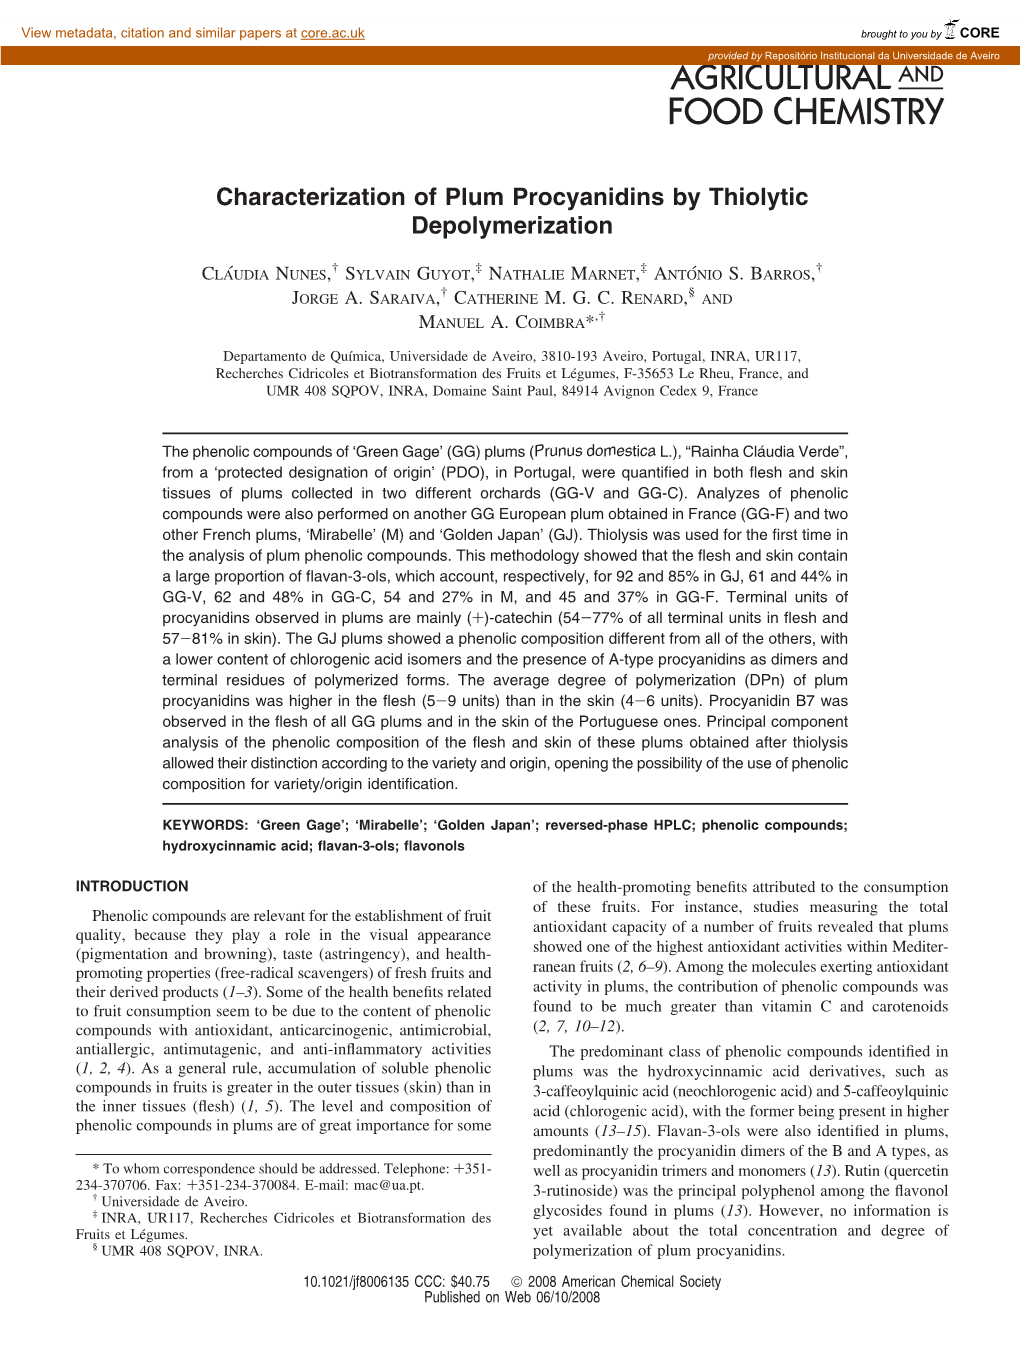 Characterization of Plum Procyanidins by Thiolytic Depolymerization